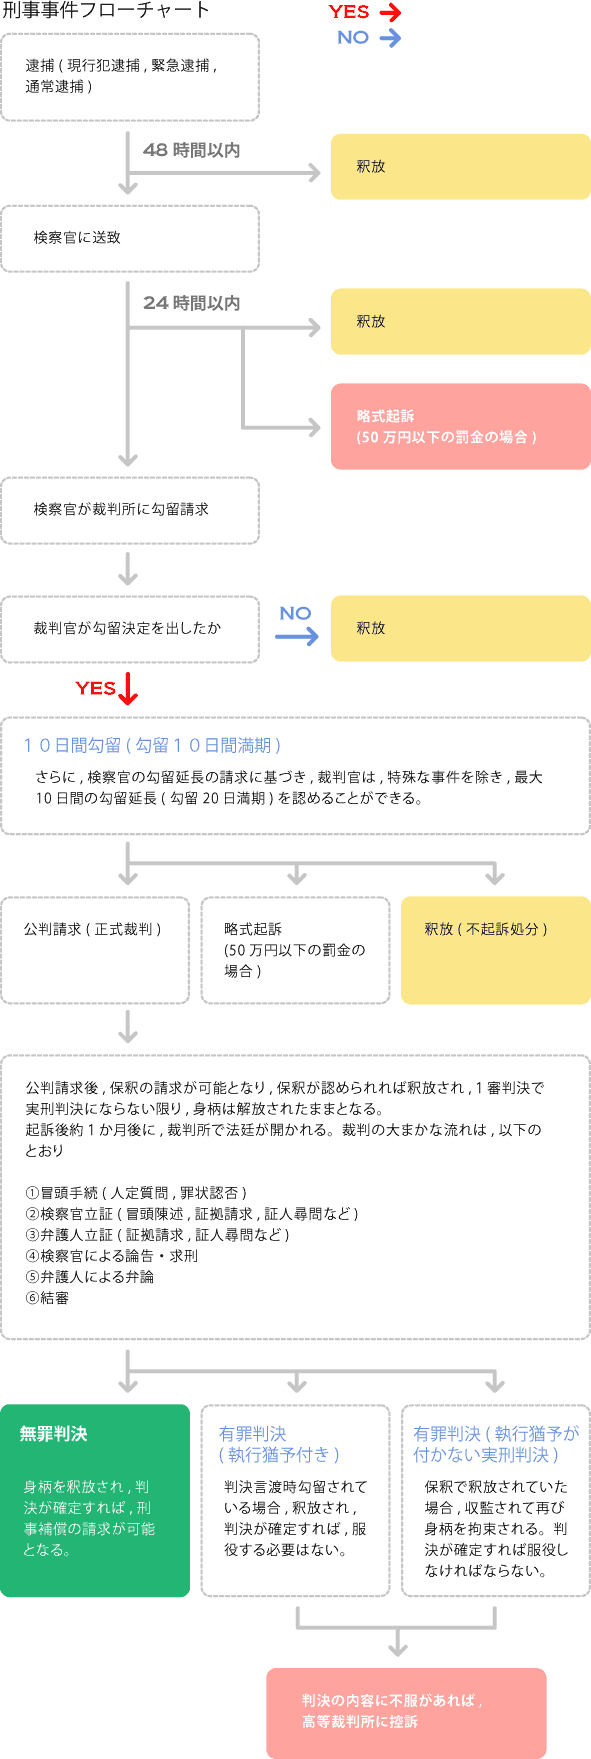 http://www.takebe-law.com/image/keiji/keiji.gif